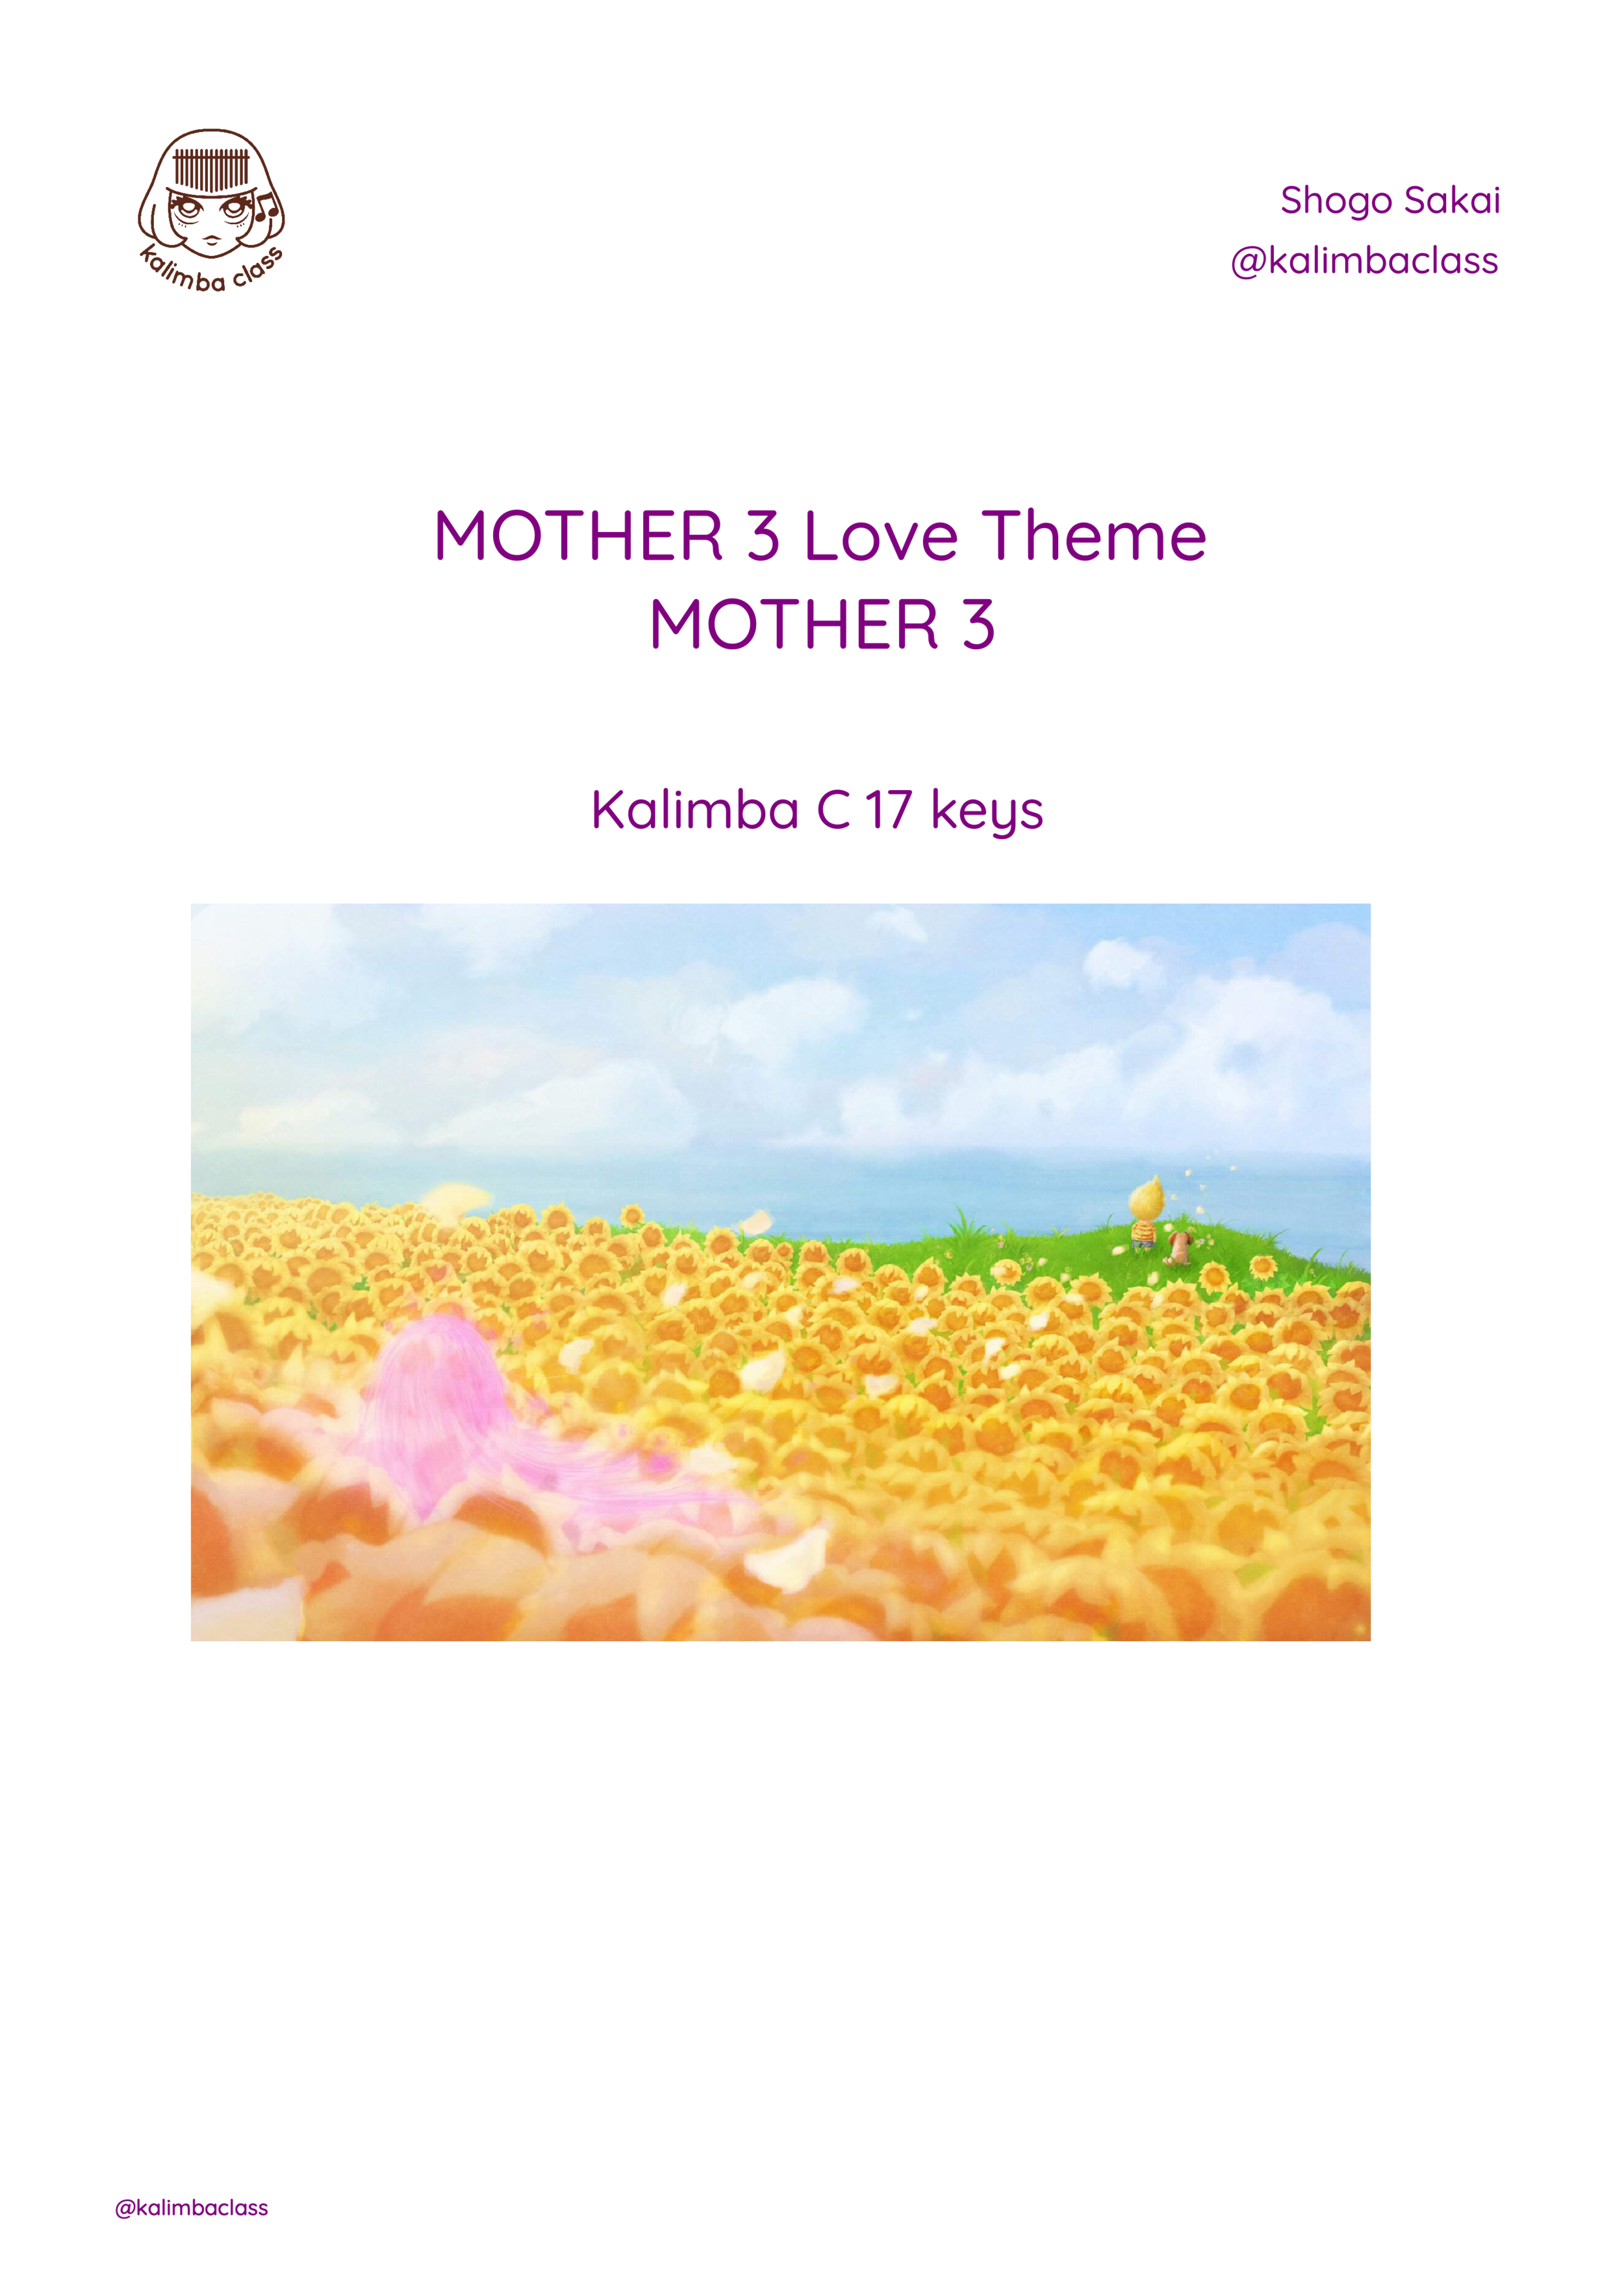 MOTHER 3 Love Theme , MOTHER 3 - Shogo Sakai